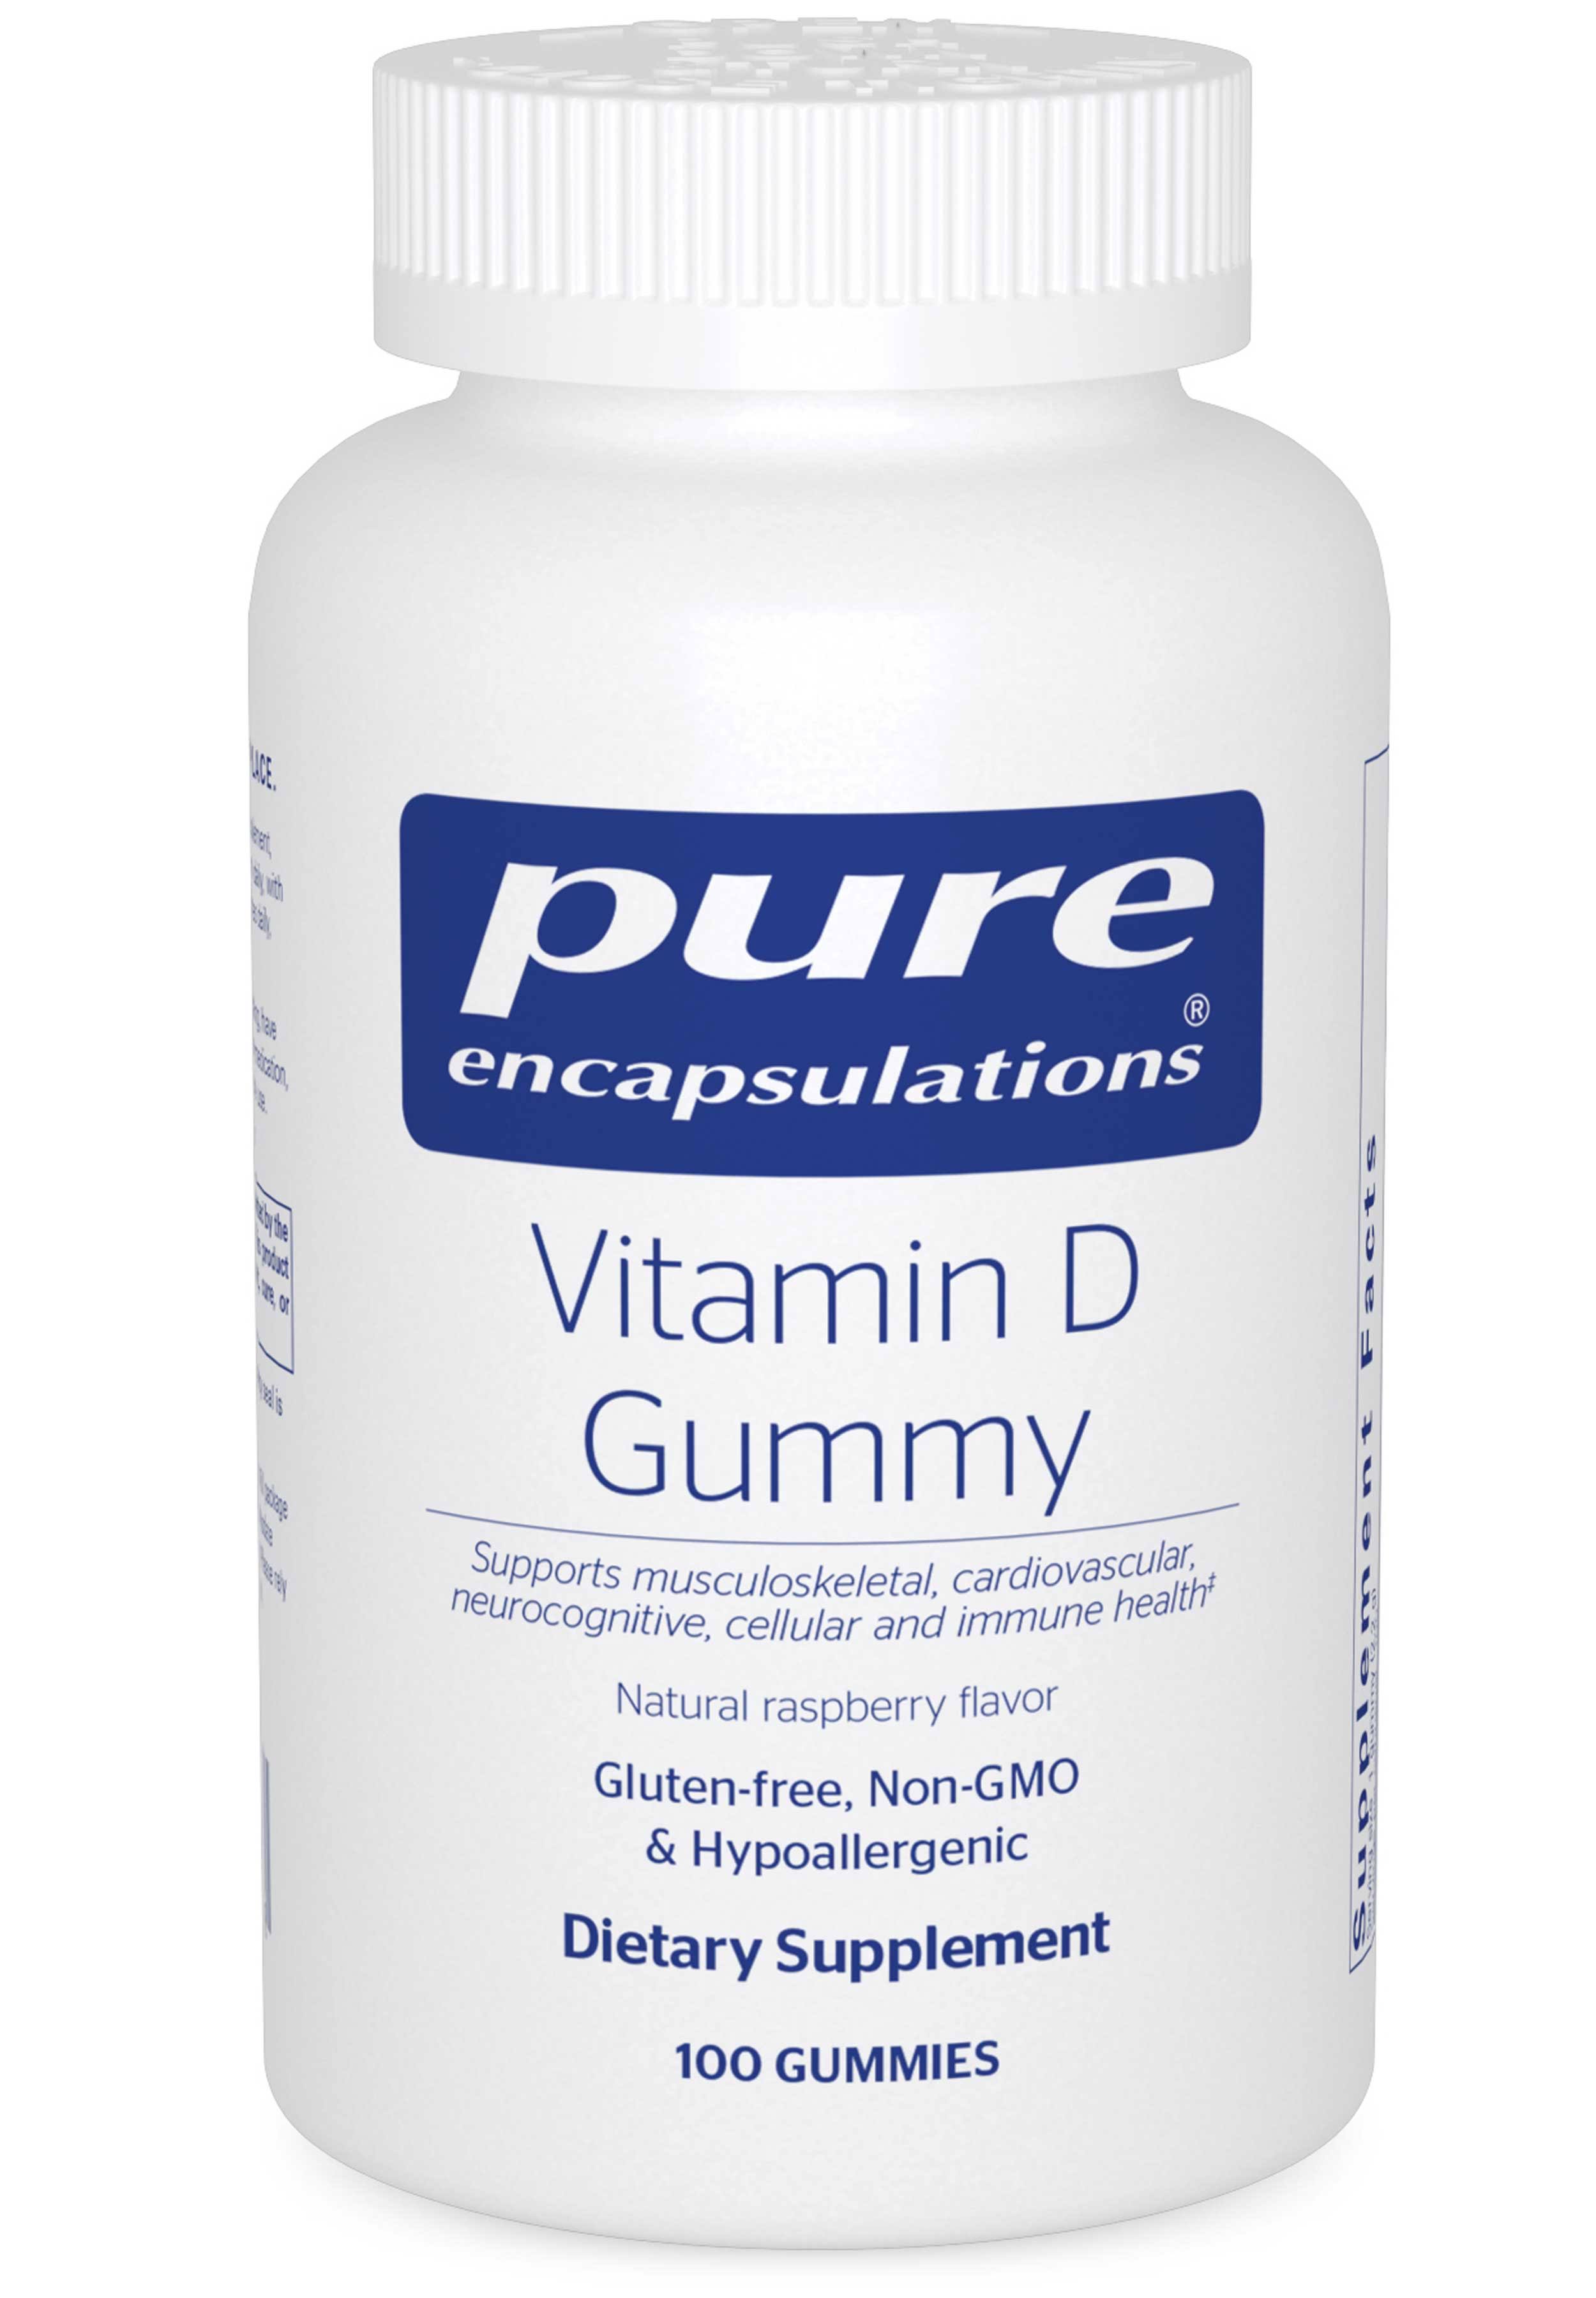 Pure Encapsulations Vitamin D Gummy, Natural Raspberry Flavor - 100